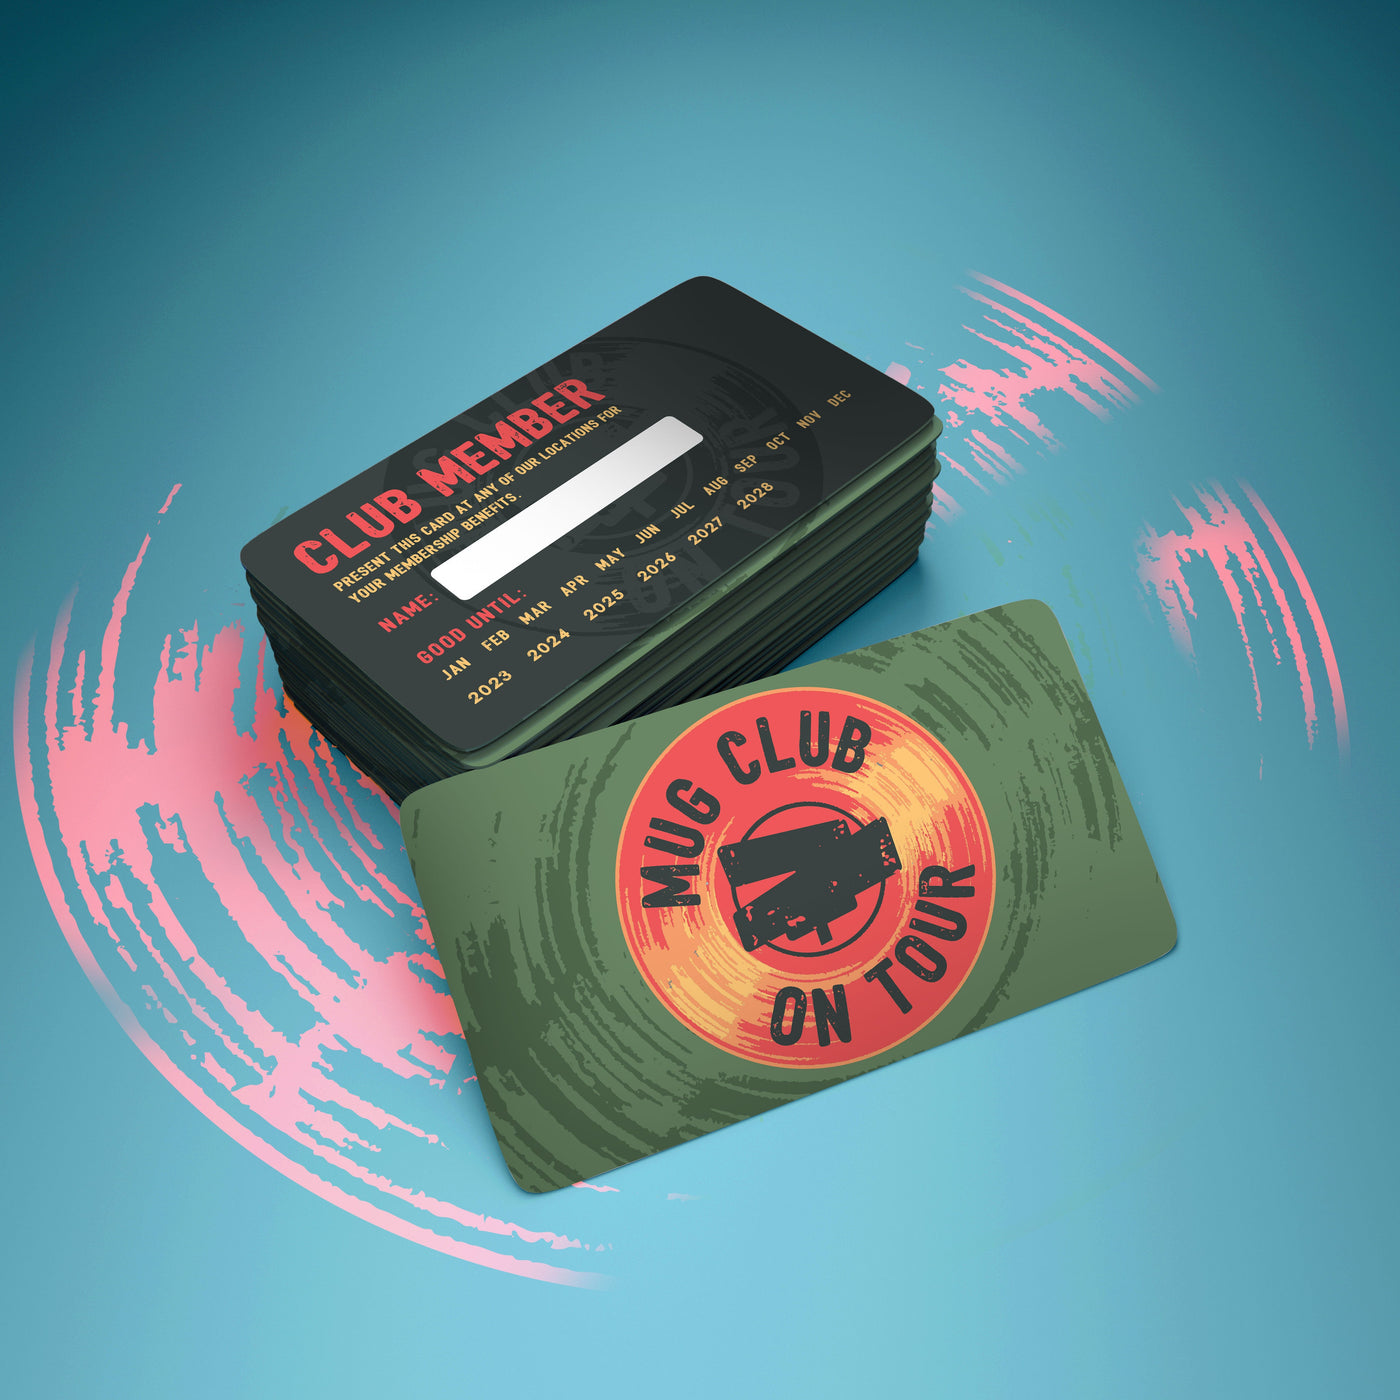 Mug Club Membership 1 Year Gift